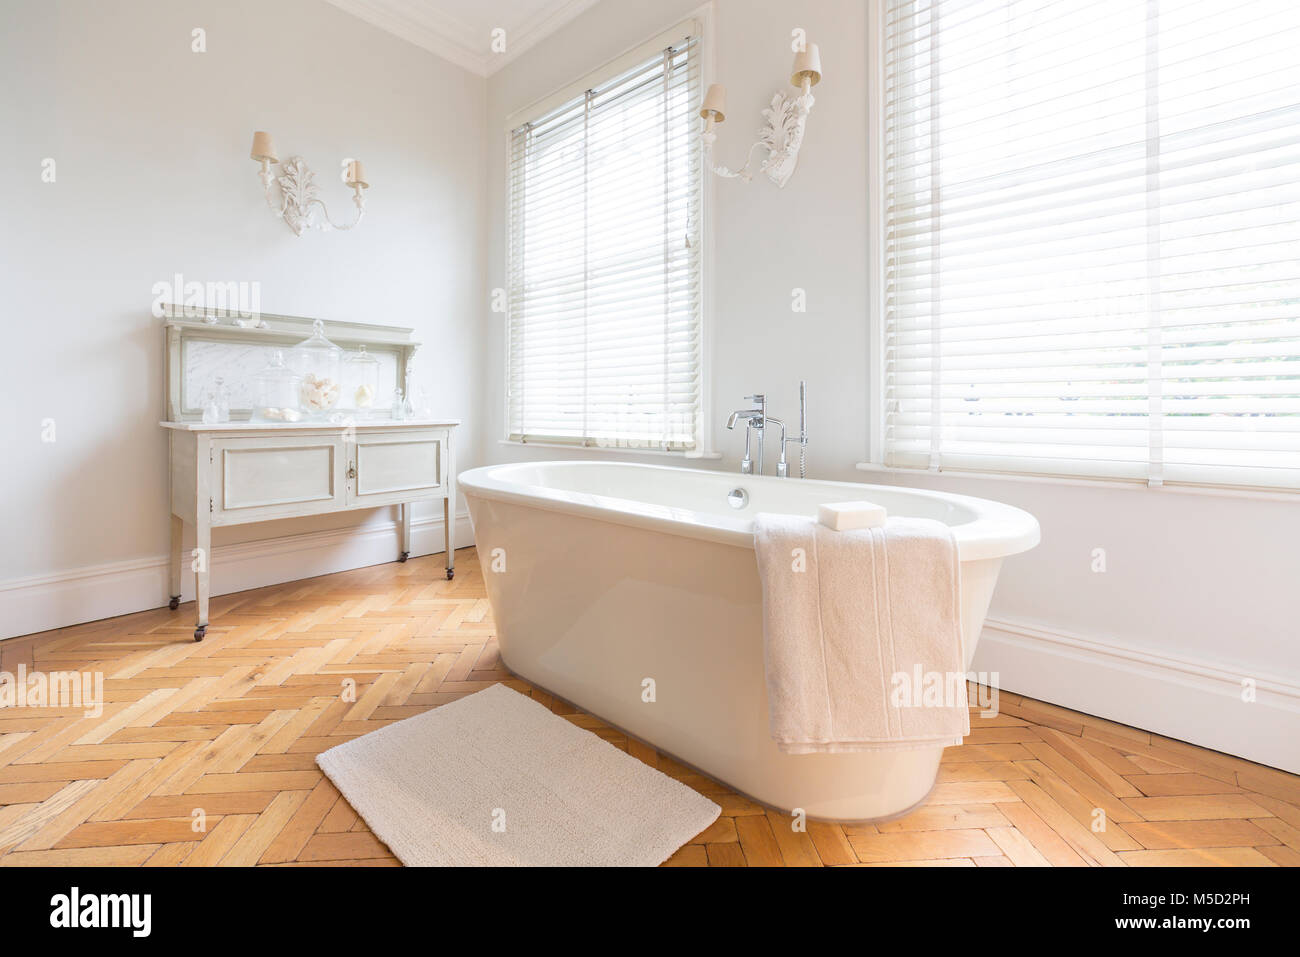 White, luxury home showcase interior bathroom with soaking tub and parquet hardwood floor Stock Photo